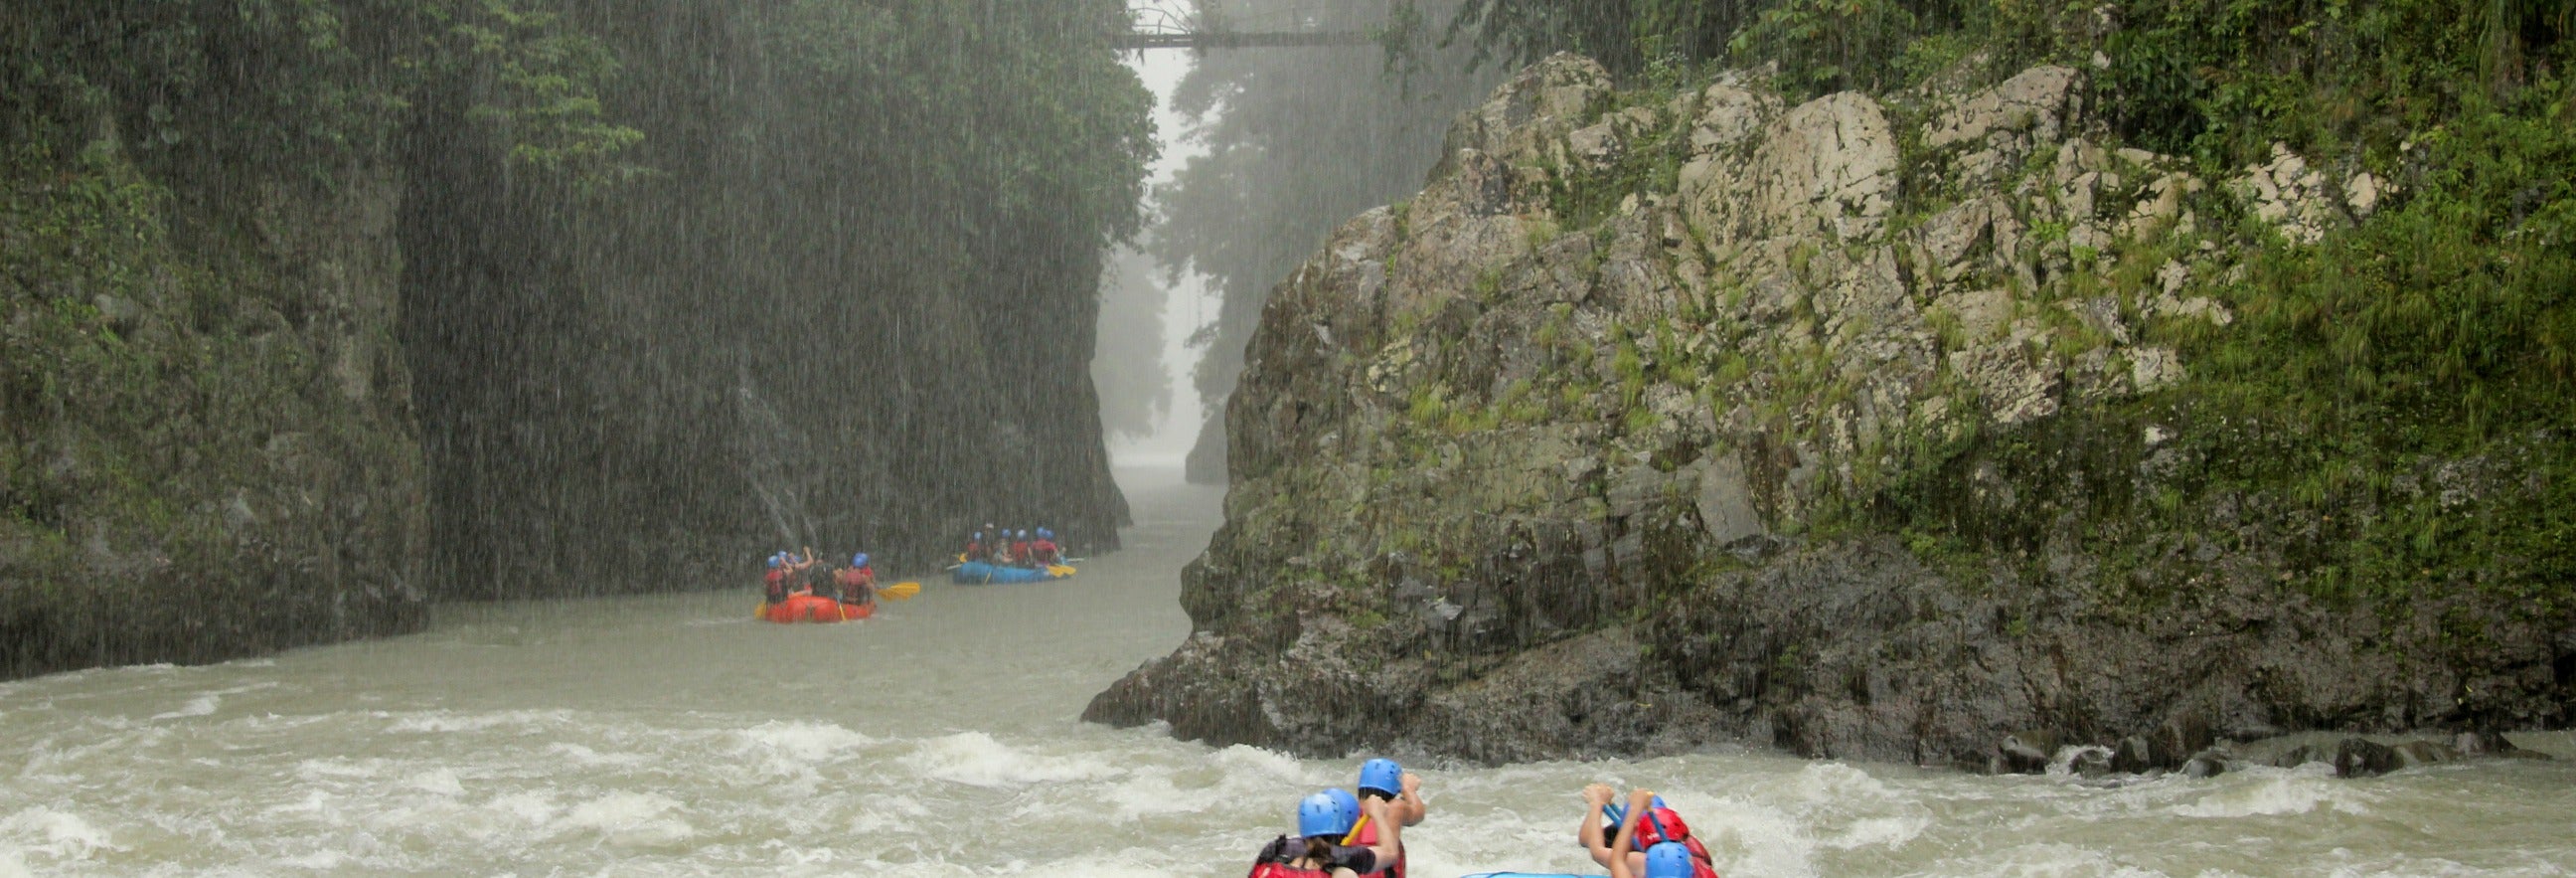 Rafting no rio Pacuare